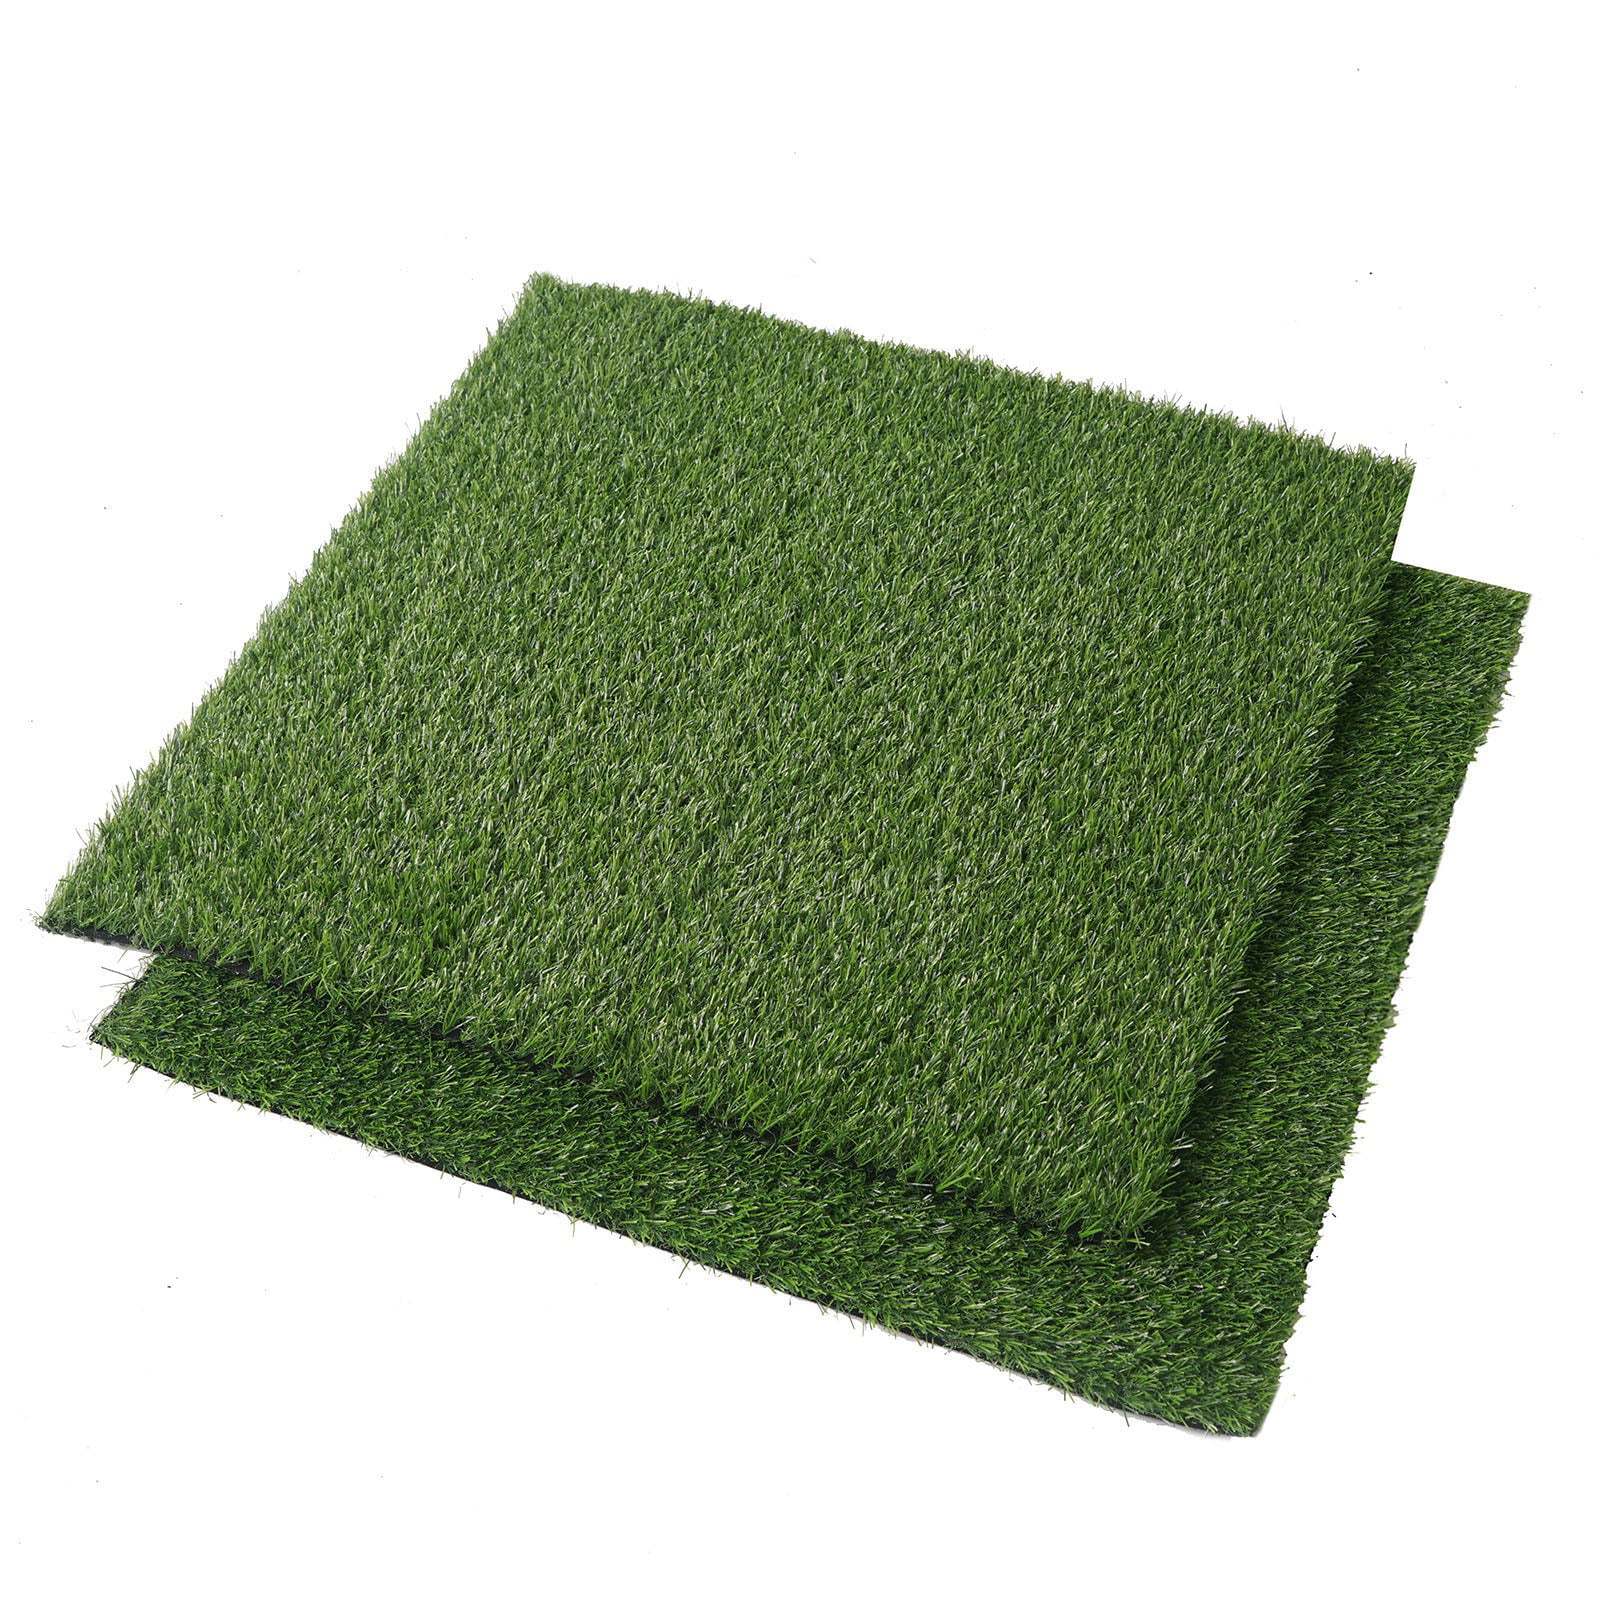 Artificial Grass Mat Synthetic Landscape Fake Turf Lawn Home Yard Garden Decor 